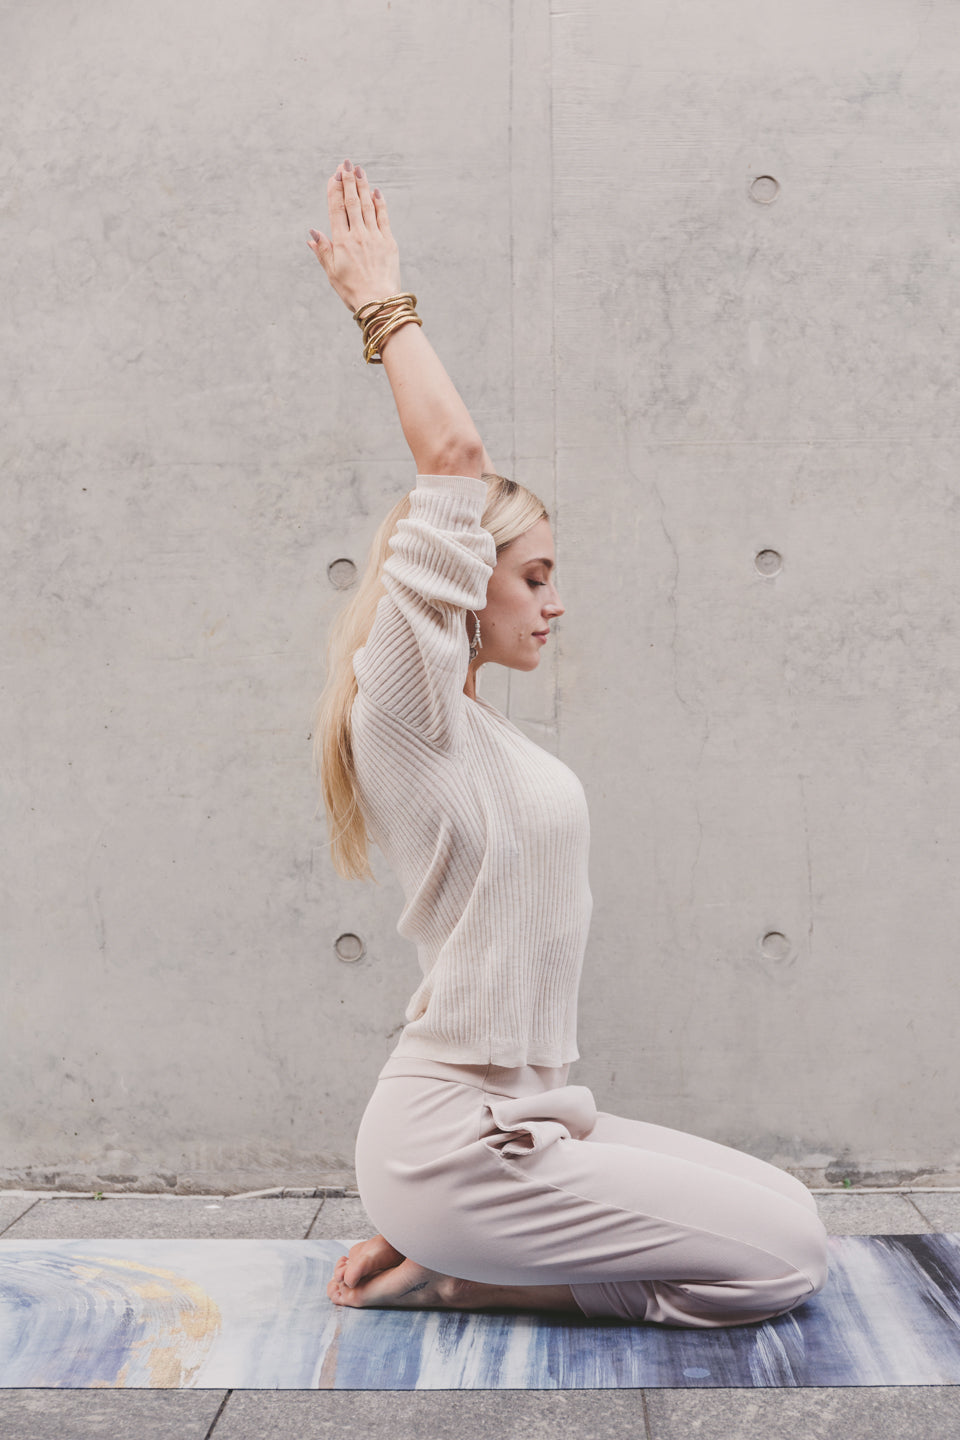 Using Sugarmat's Yoga Stretching Ring